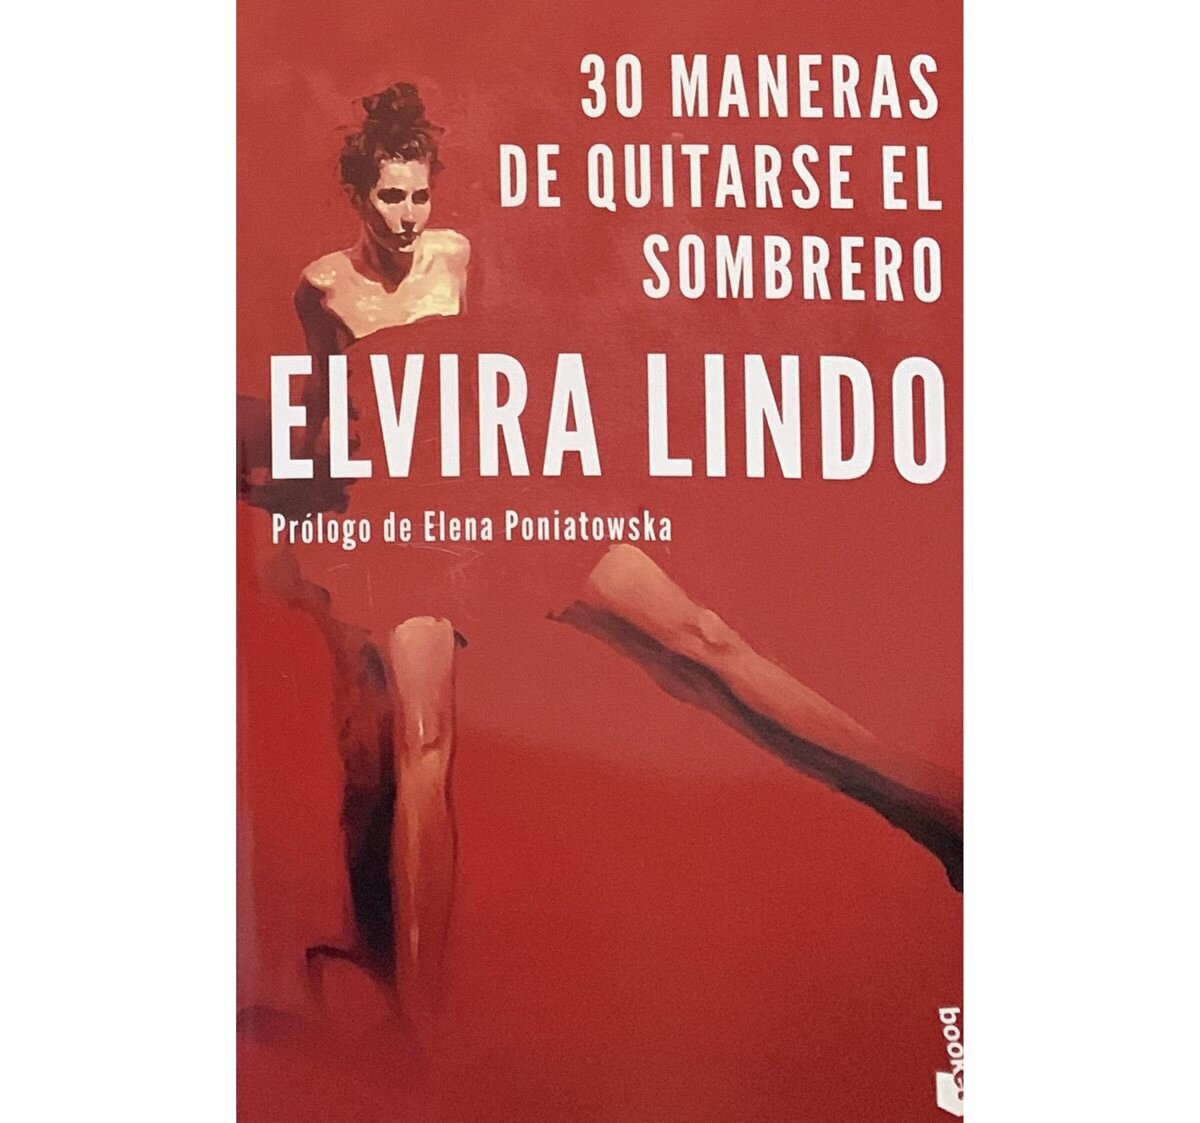 Elvira Lindo: 30 maneras de quitarse el sombrero IN SPANISH